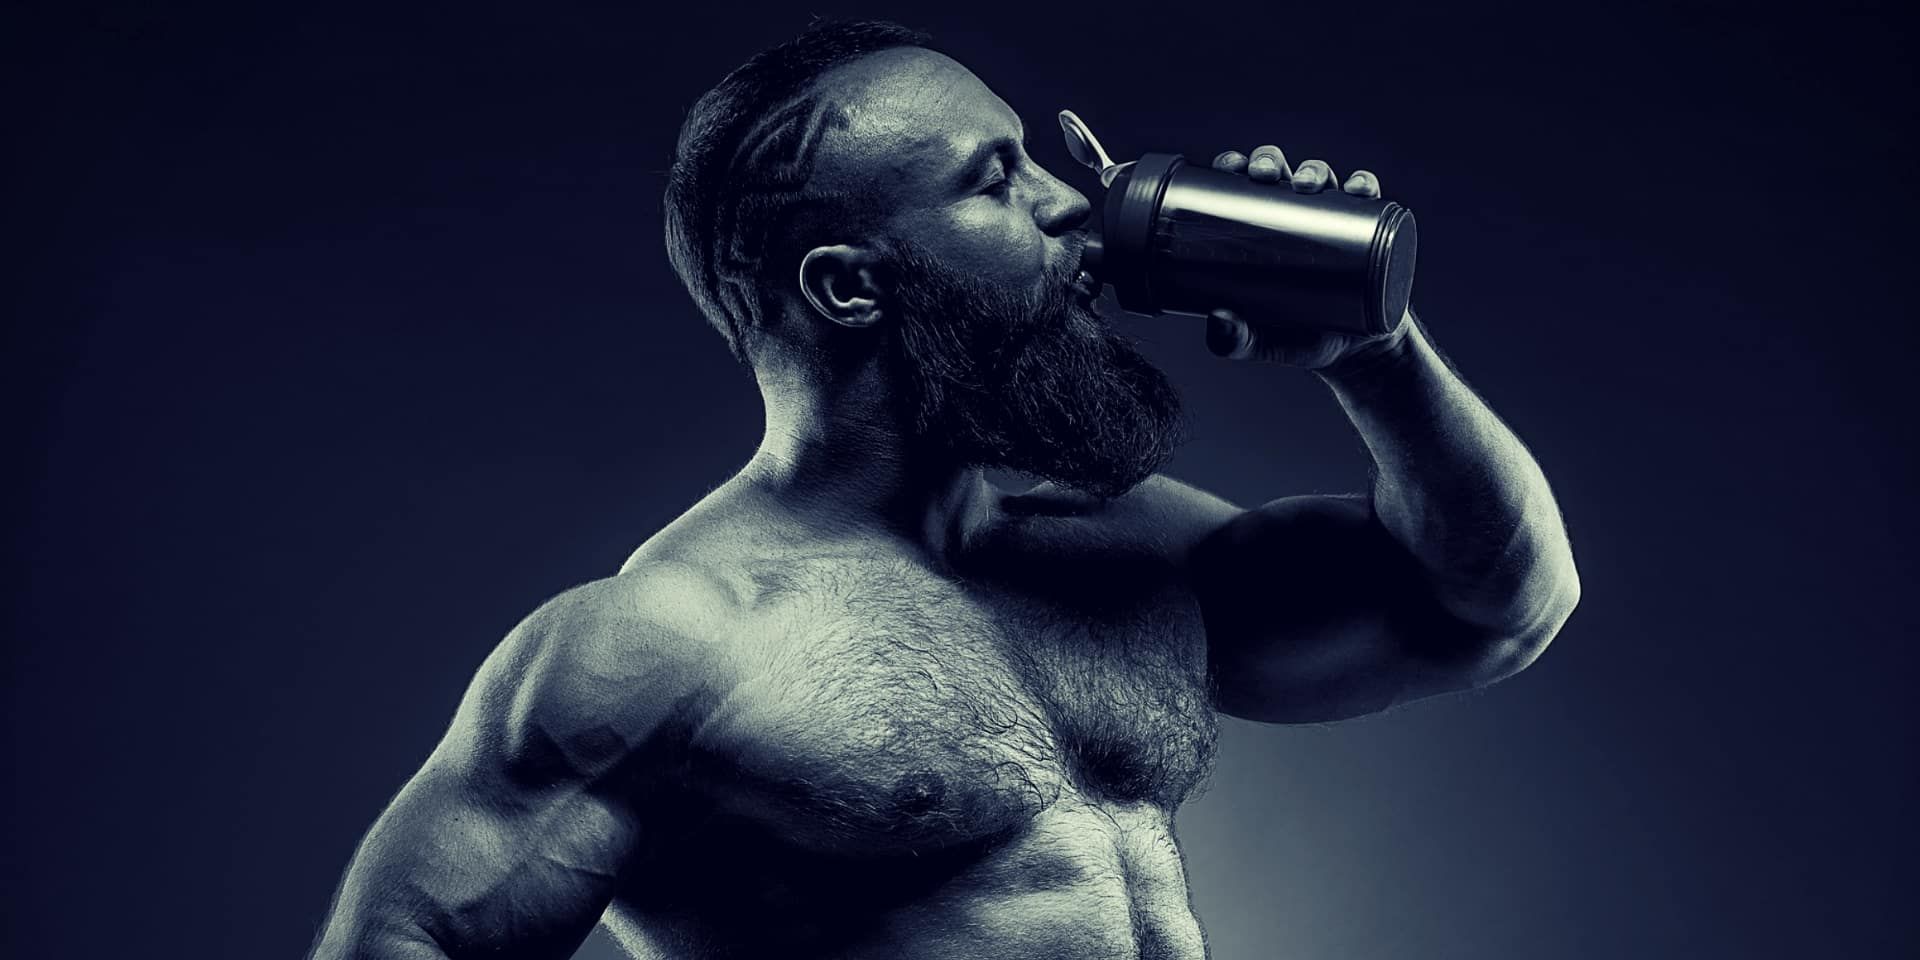 Pine Pollen Benefits bearded Man bodybuilder posing on gray background